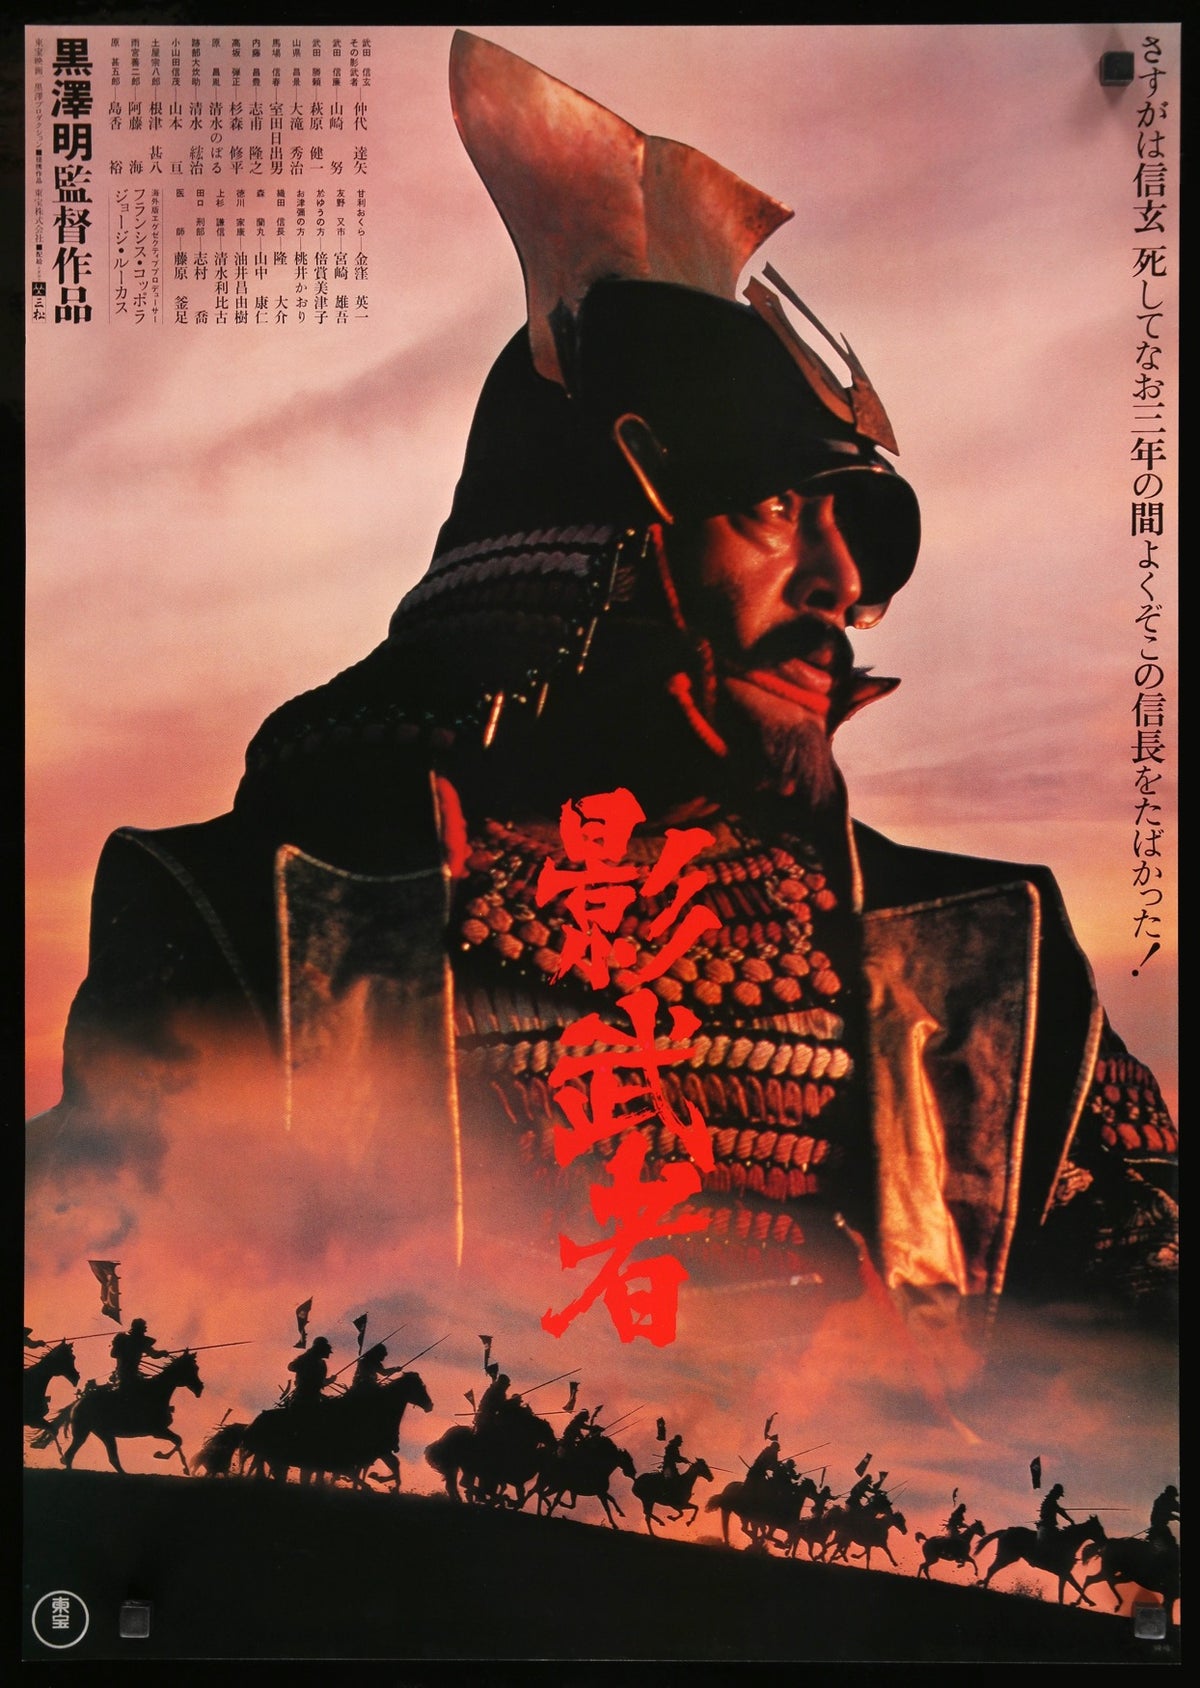 Kagemusha (1980) original movie poster for sale at Original Film Art